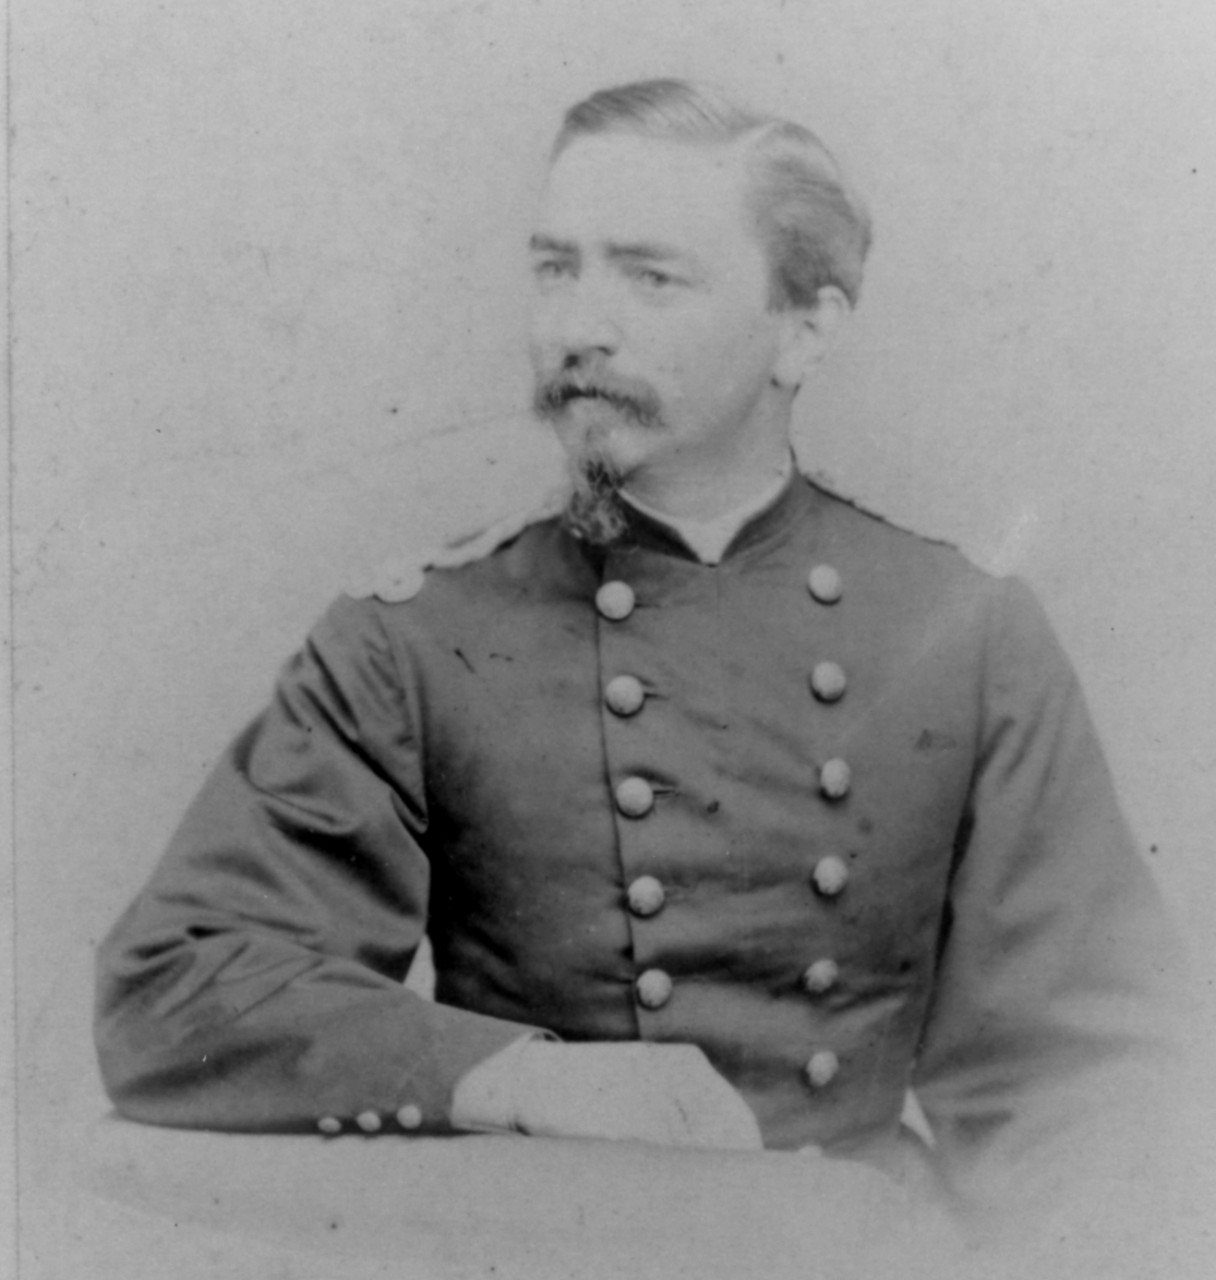 First Lieutenant William B. Remey, USMC